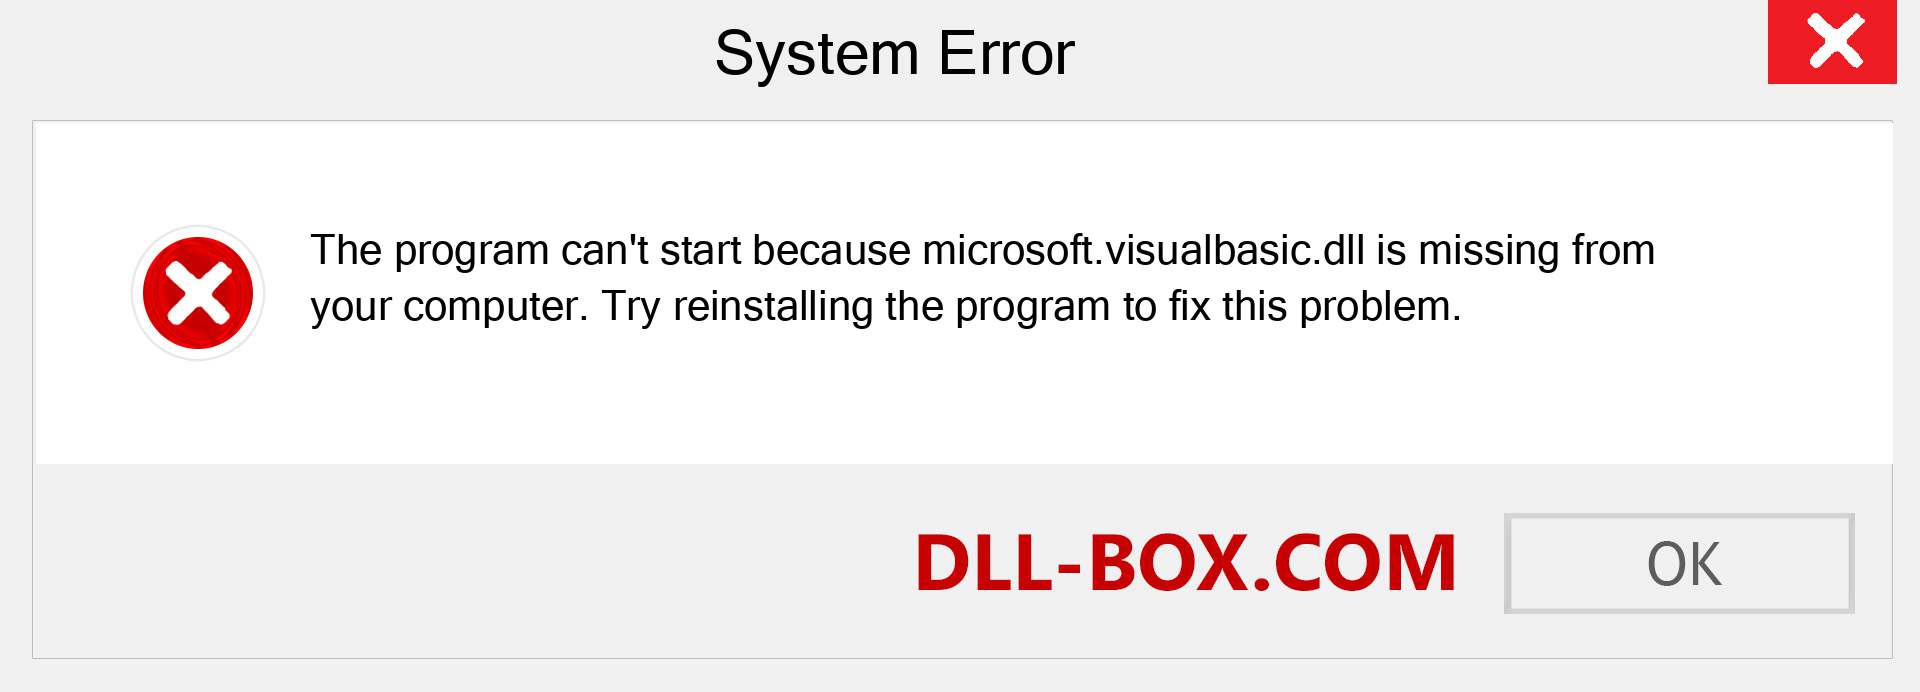  microsoft.visualbasic.dll file is missing?. Download for Windows 7, 8, 10 - Fix  microsoft.visualbasic dll Missing Error on Windows, photos, images